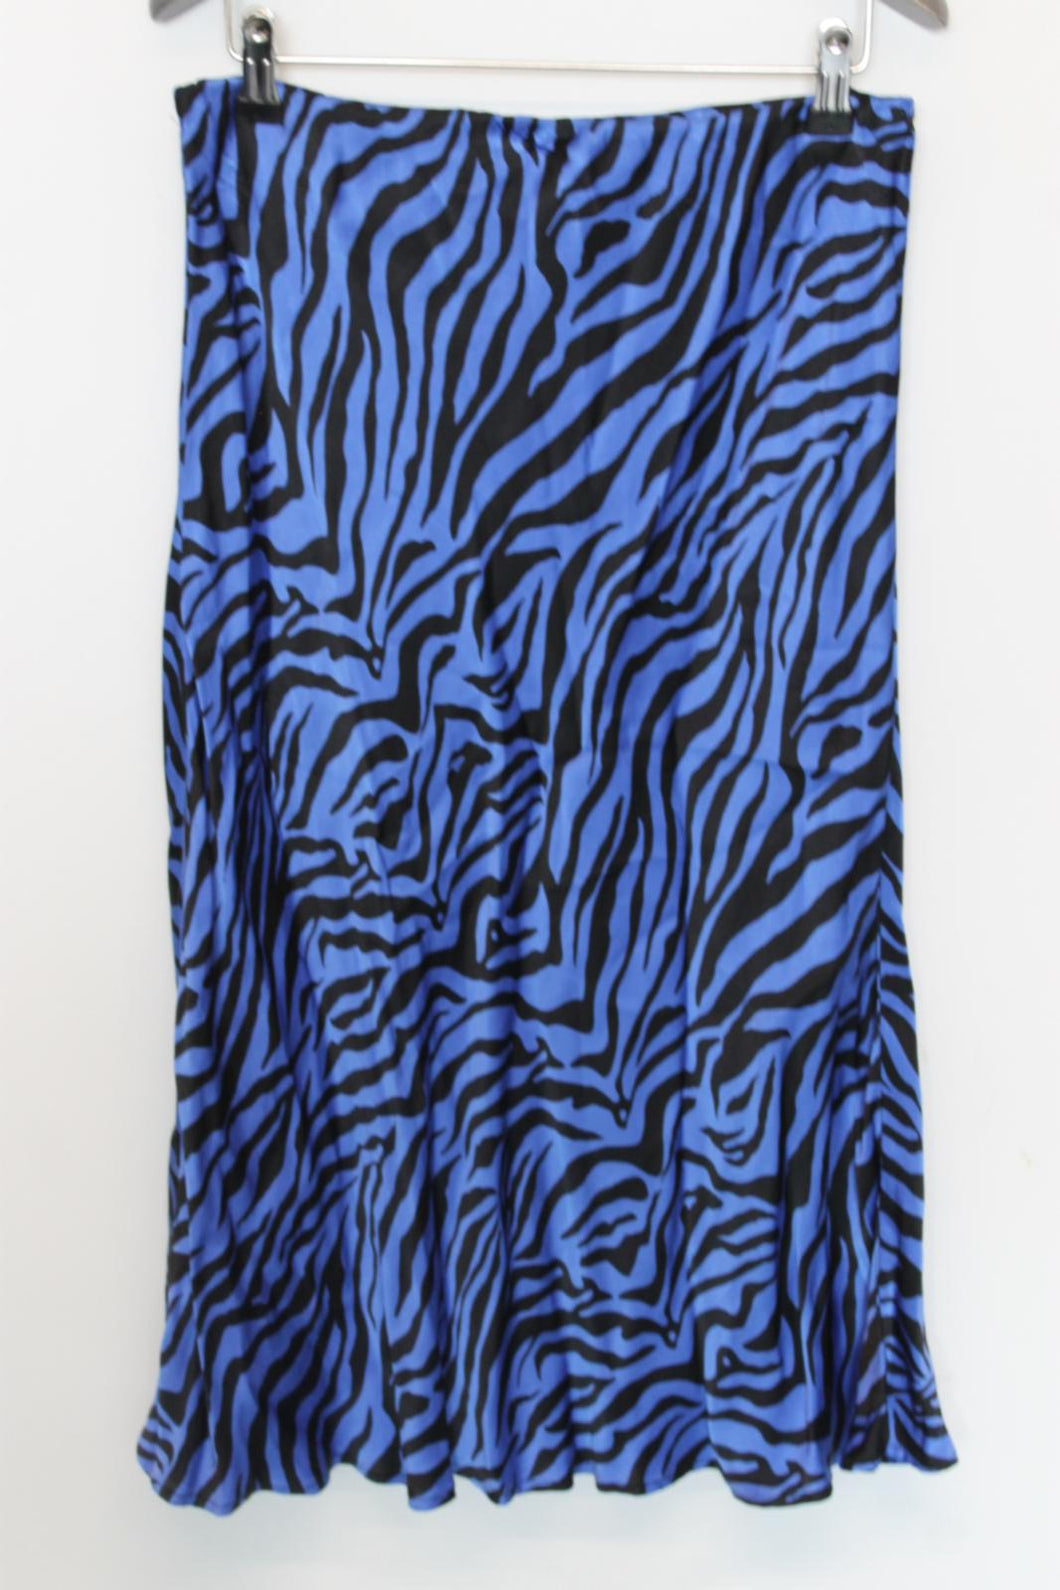 GHOST Ladies Black & Blue Zebra Print Straight Midi Skirt Size M